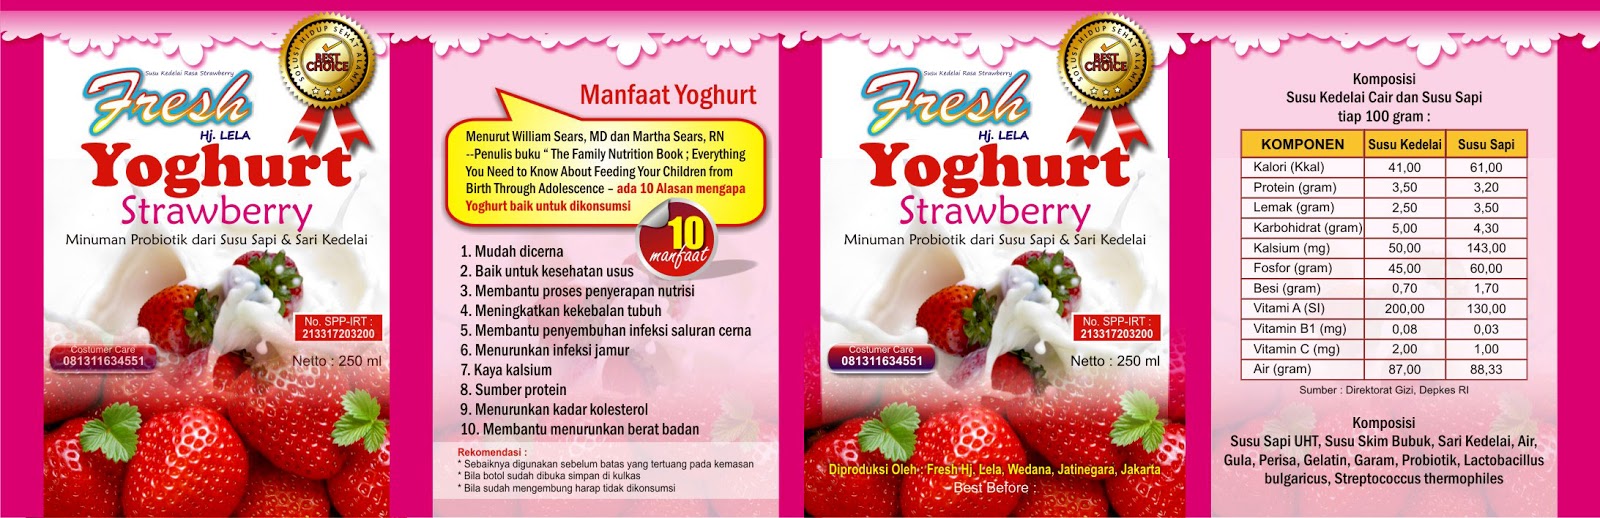 desain kemasan yoghurt
